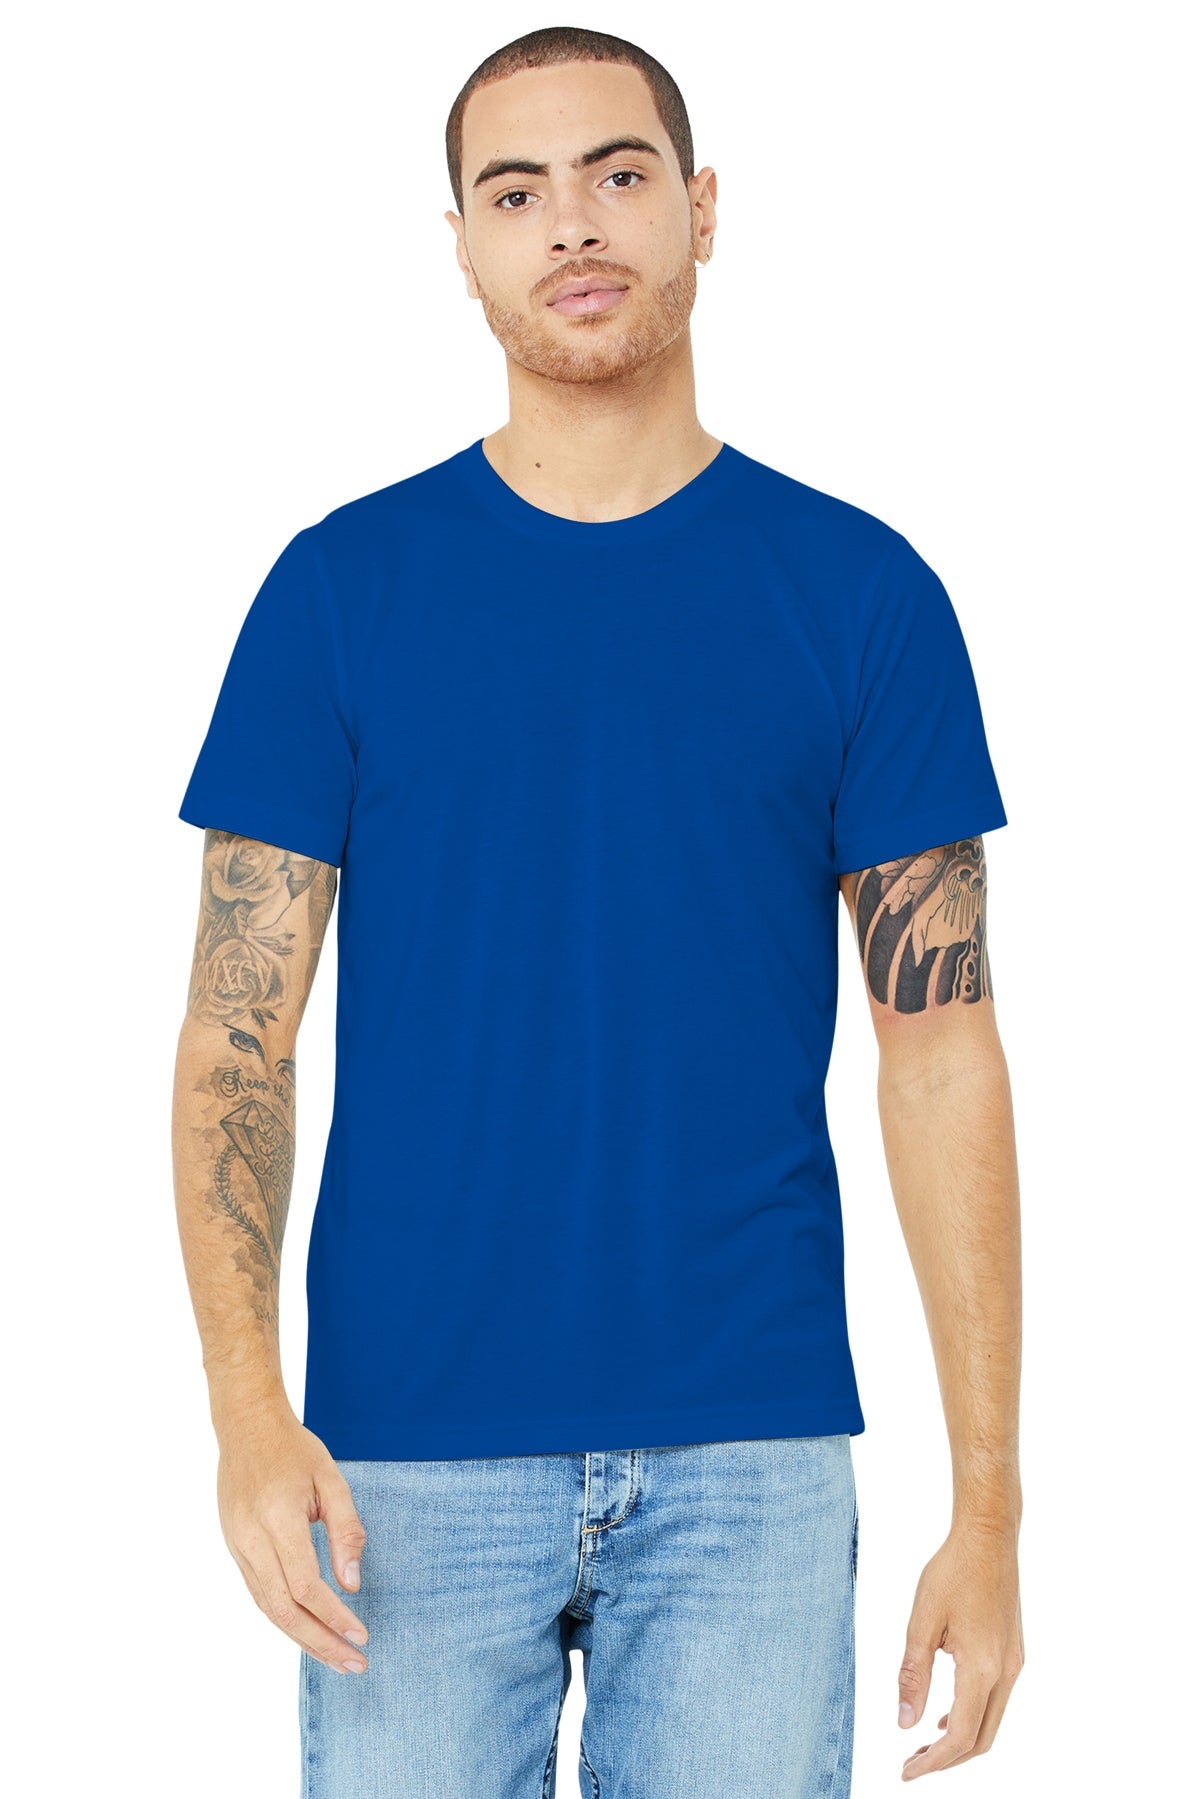 Bella+Canvas Unisex Jersey Short Sleeve T-Shirt